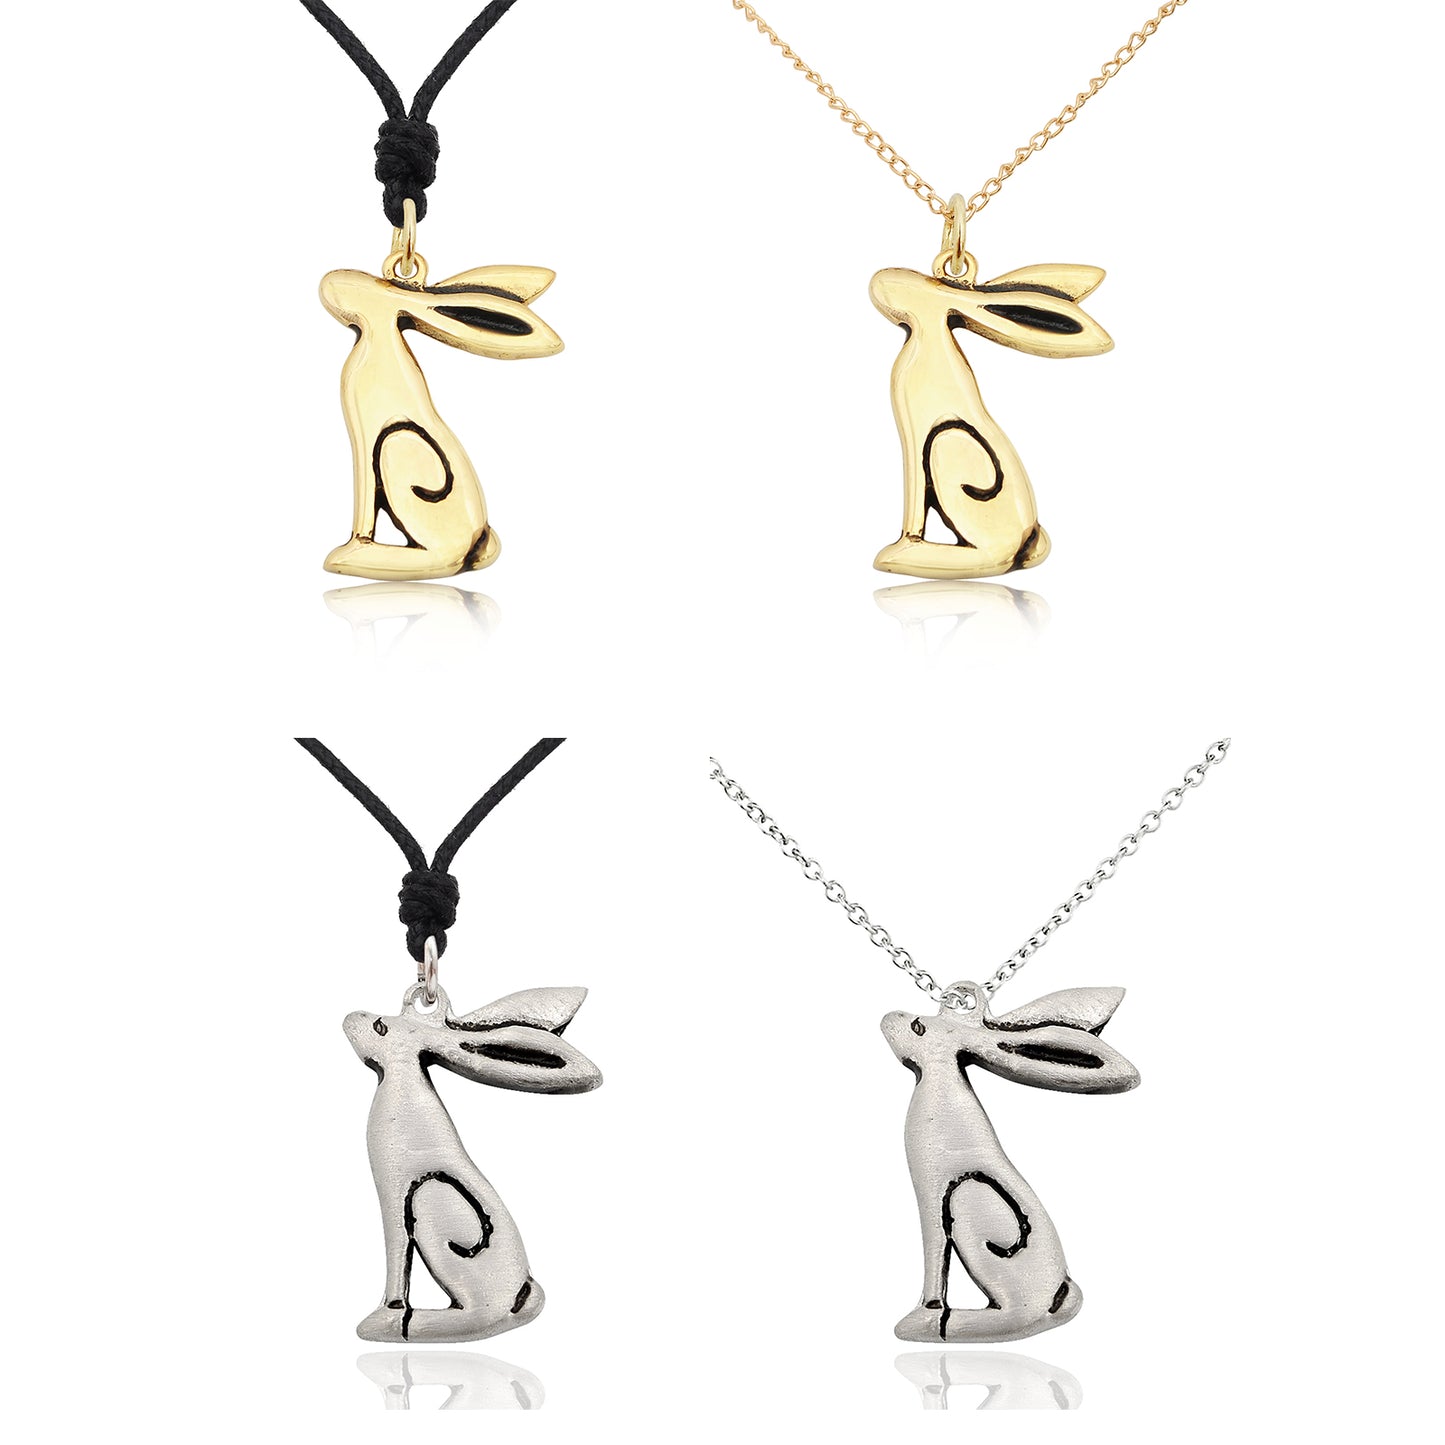 Cute Rabbit Handmade Brass Pewter Charm Necklace Pendant Jewelry